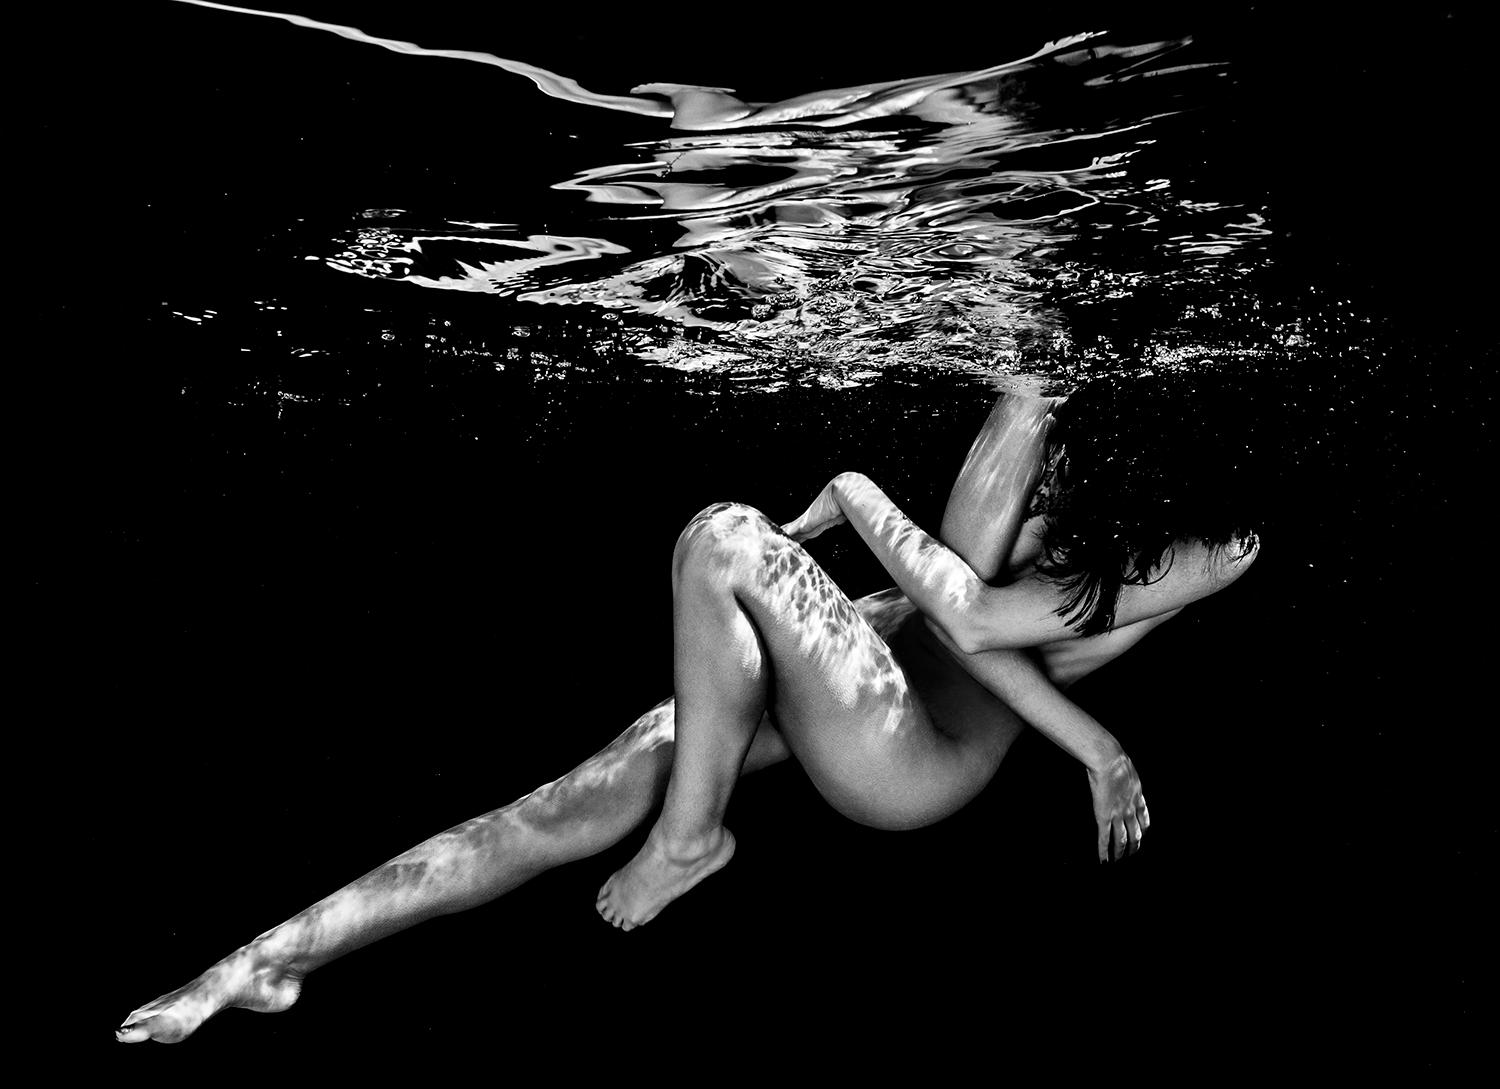 Night Flight - underwater black & white nude photograph - print on paper 23x32